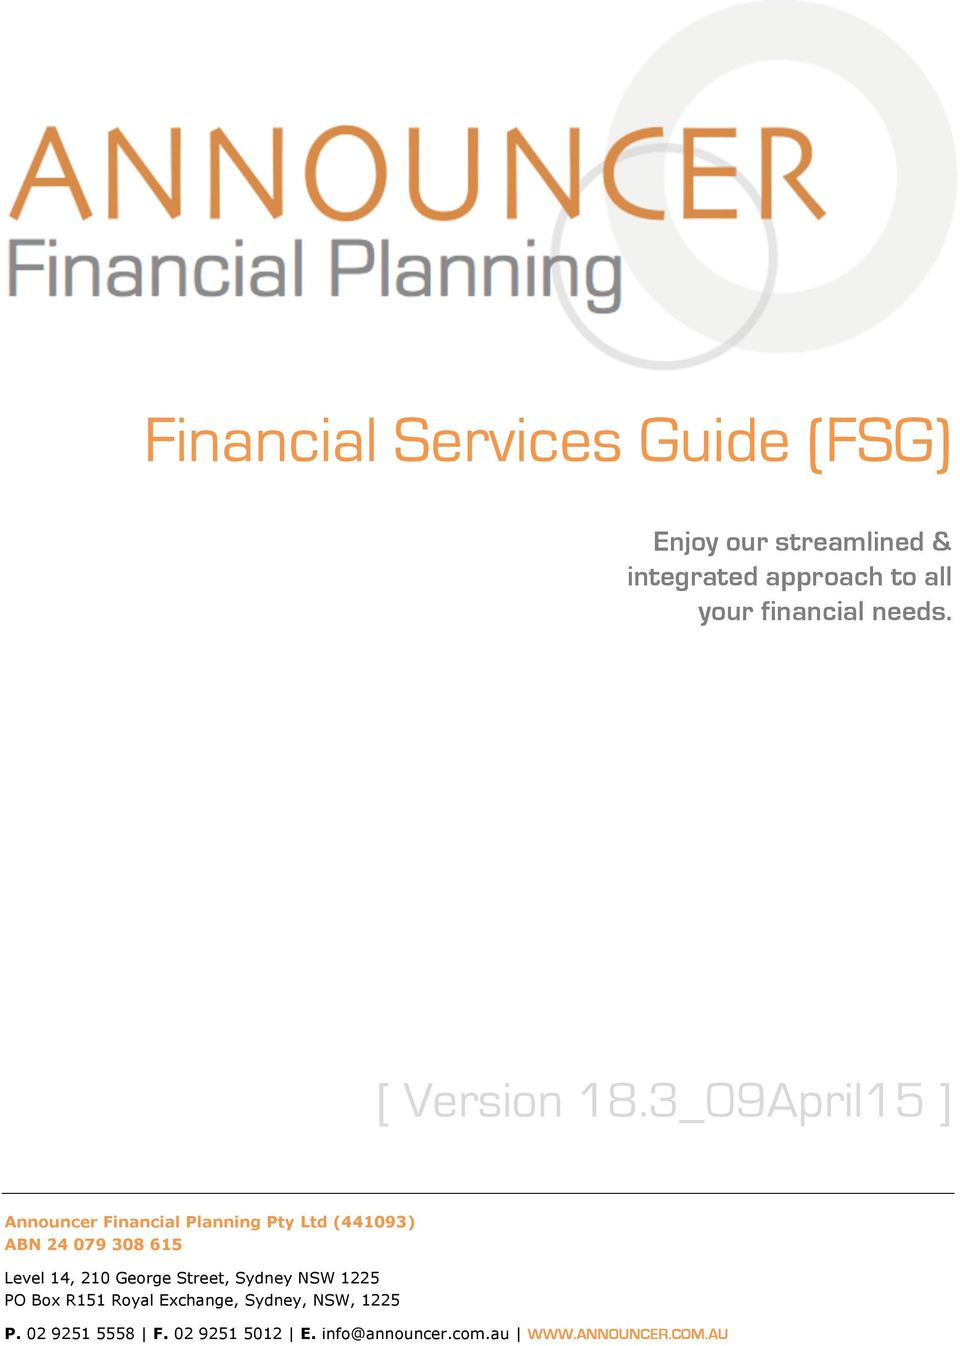 3_09April15 ] Announcer Financial Planning Pty Ltd (441093) ABN 24 079 308 615 Level 14,